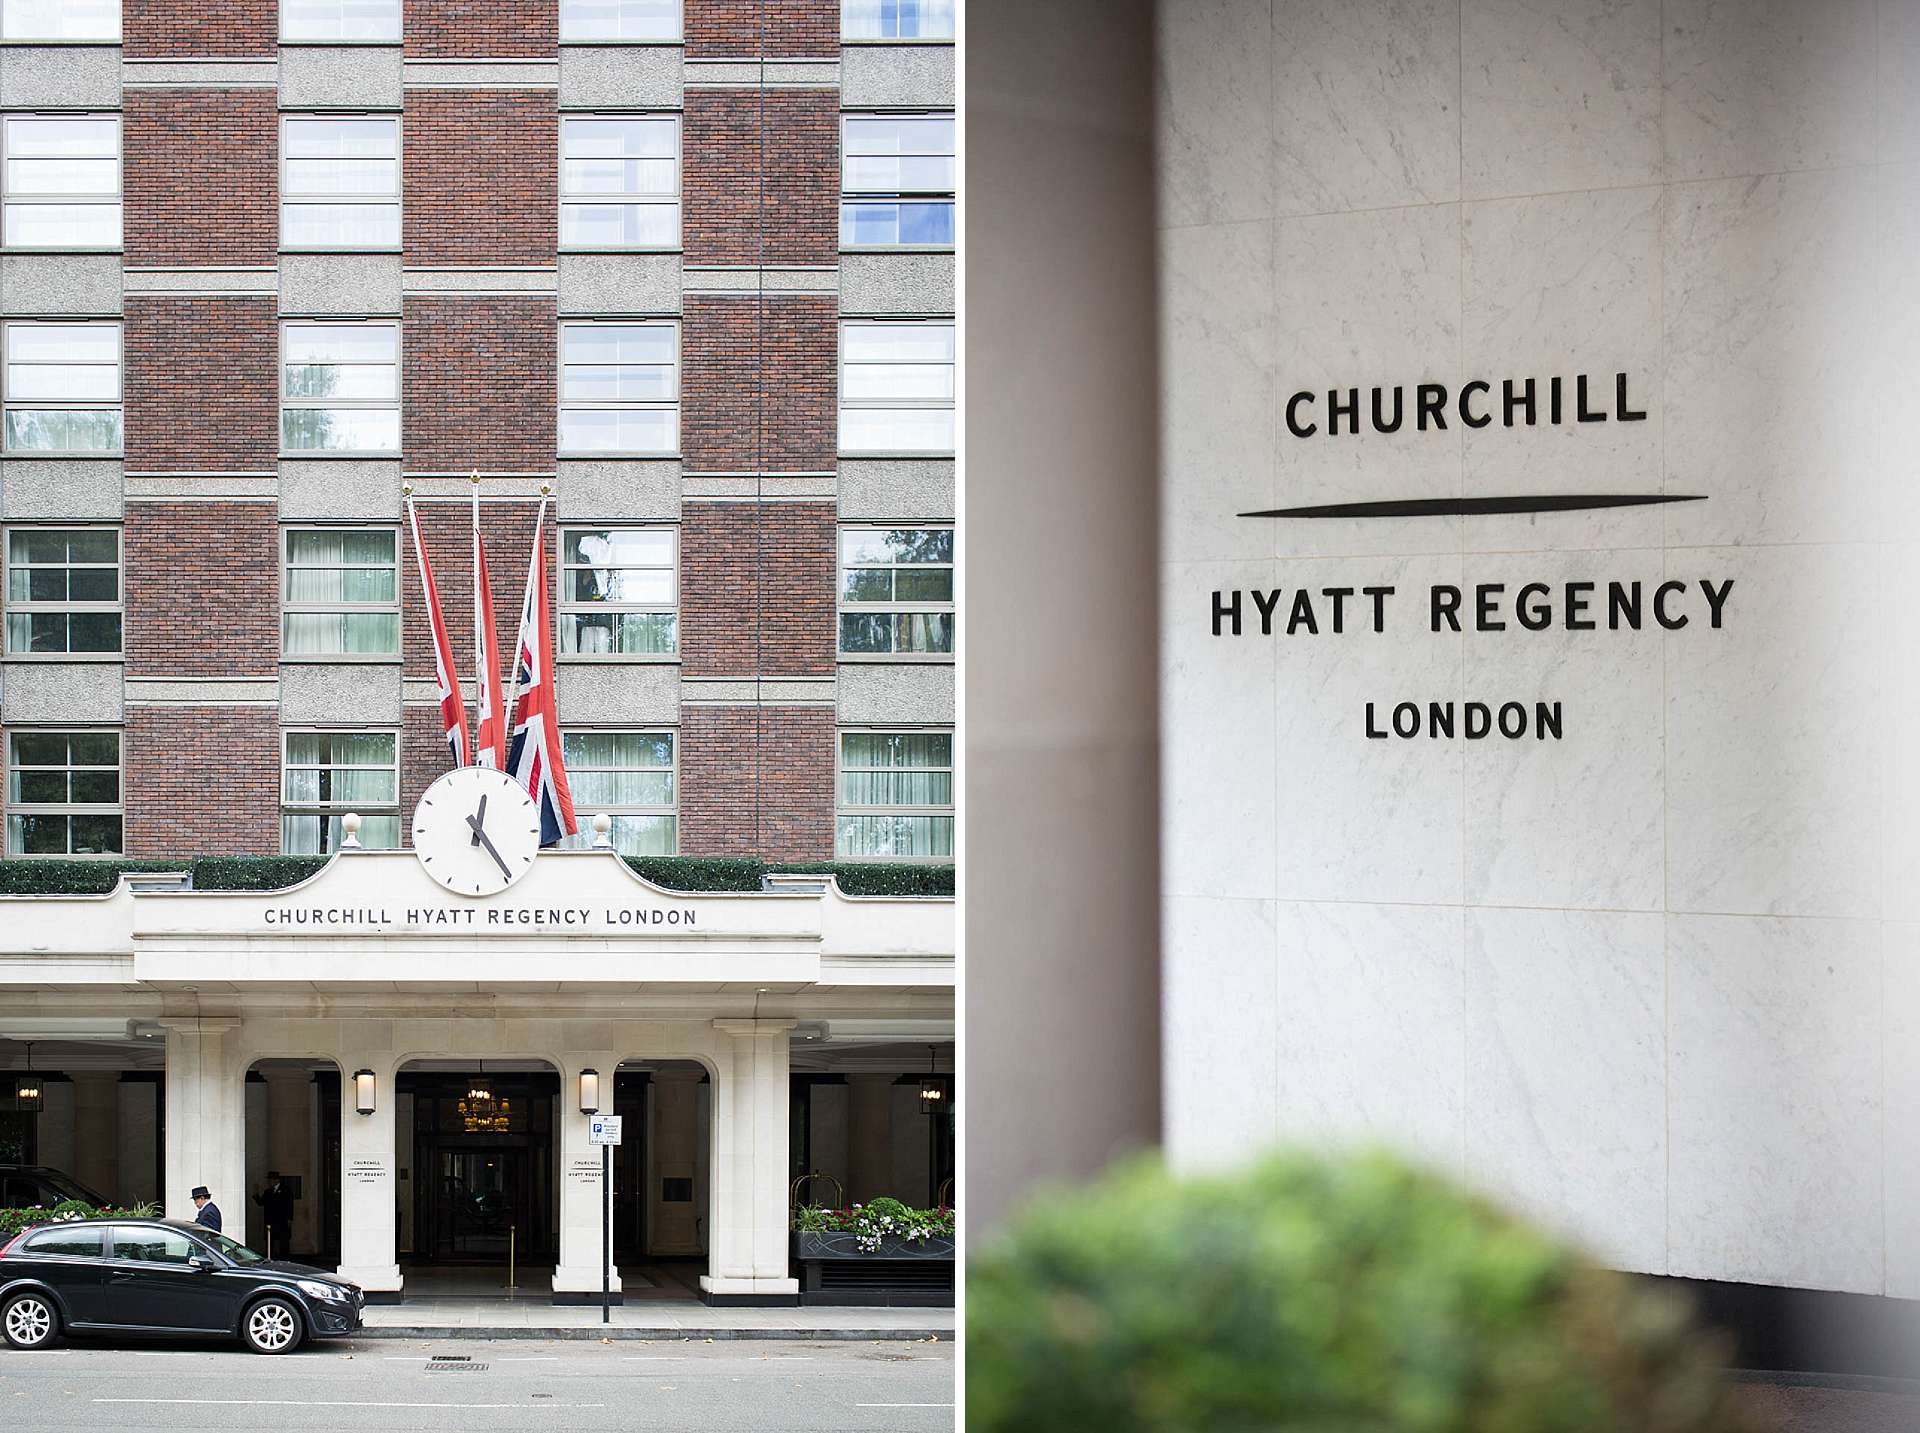 Hyatt Regency London - The Churchill